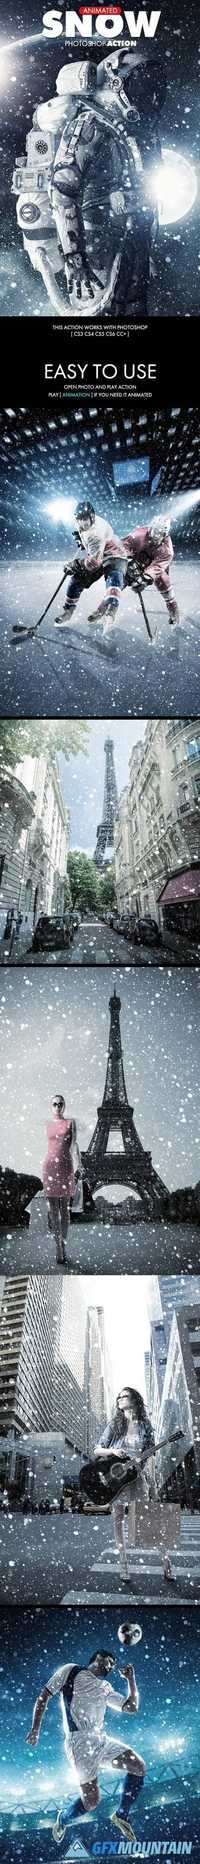 Snow Photoshop Action - Animated 20693215